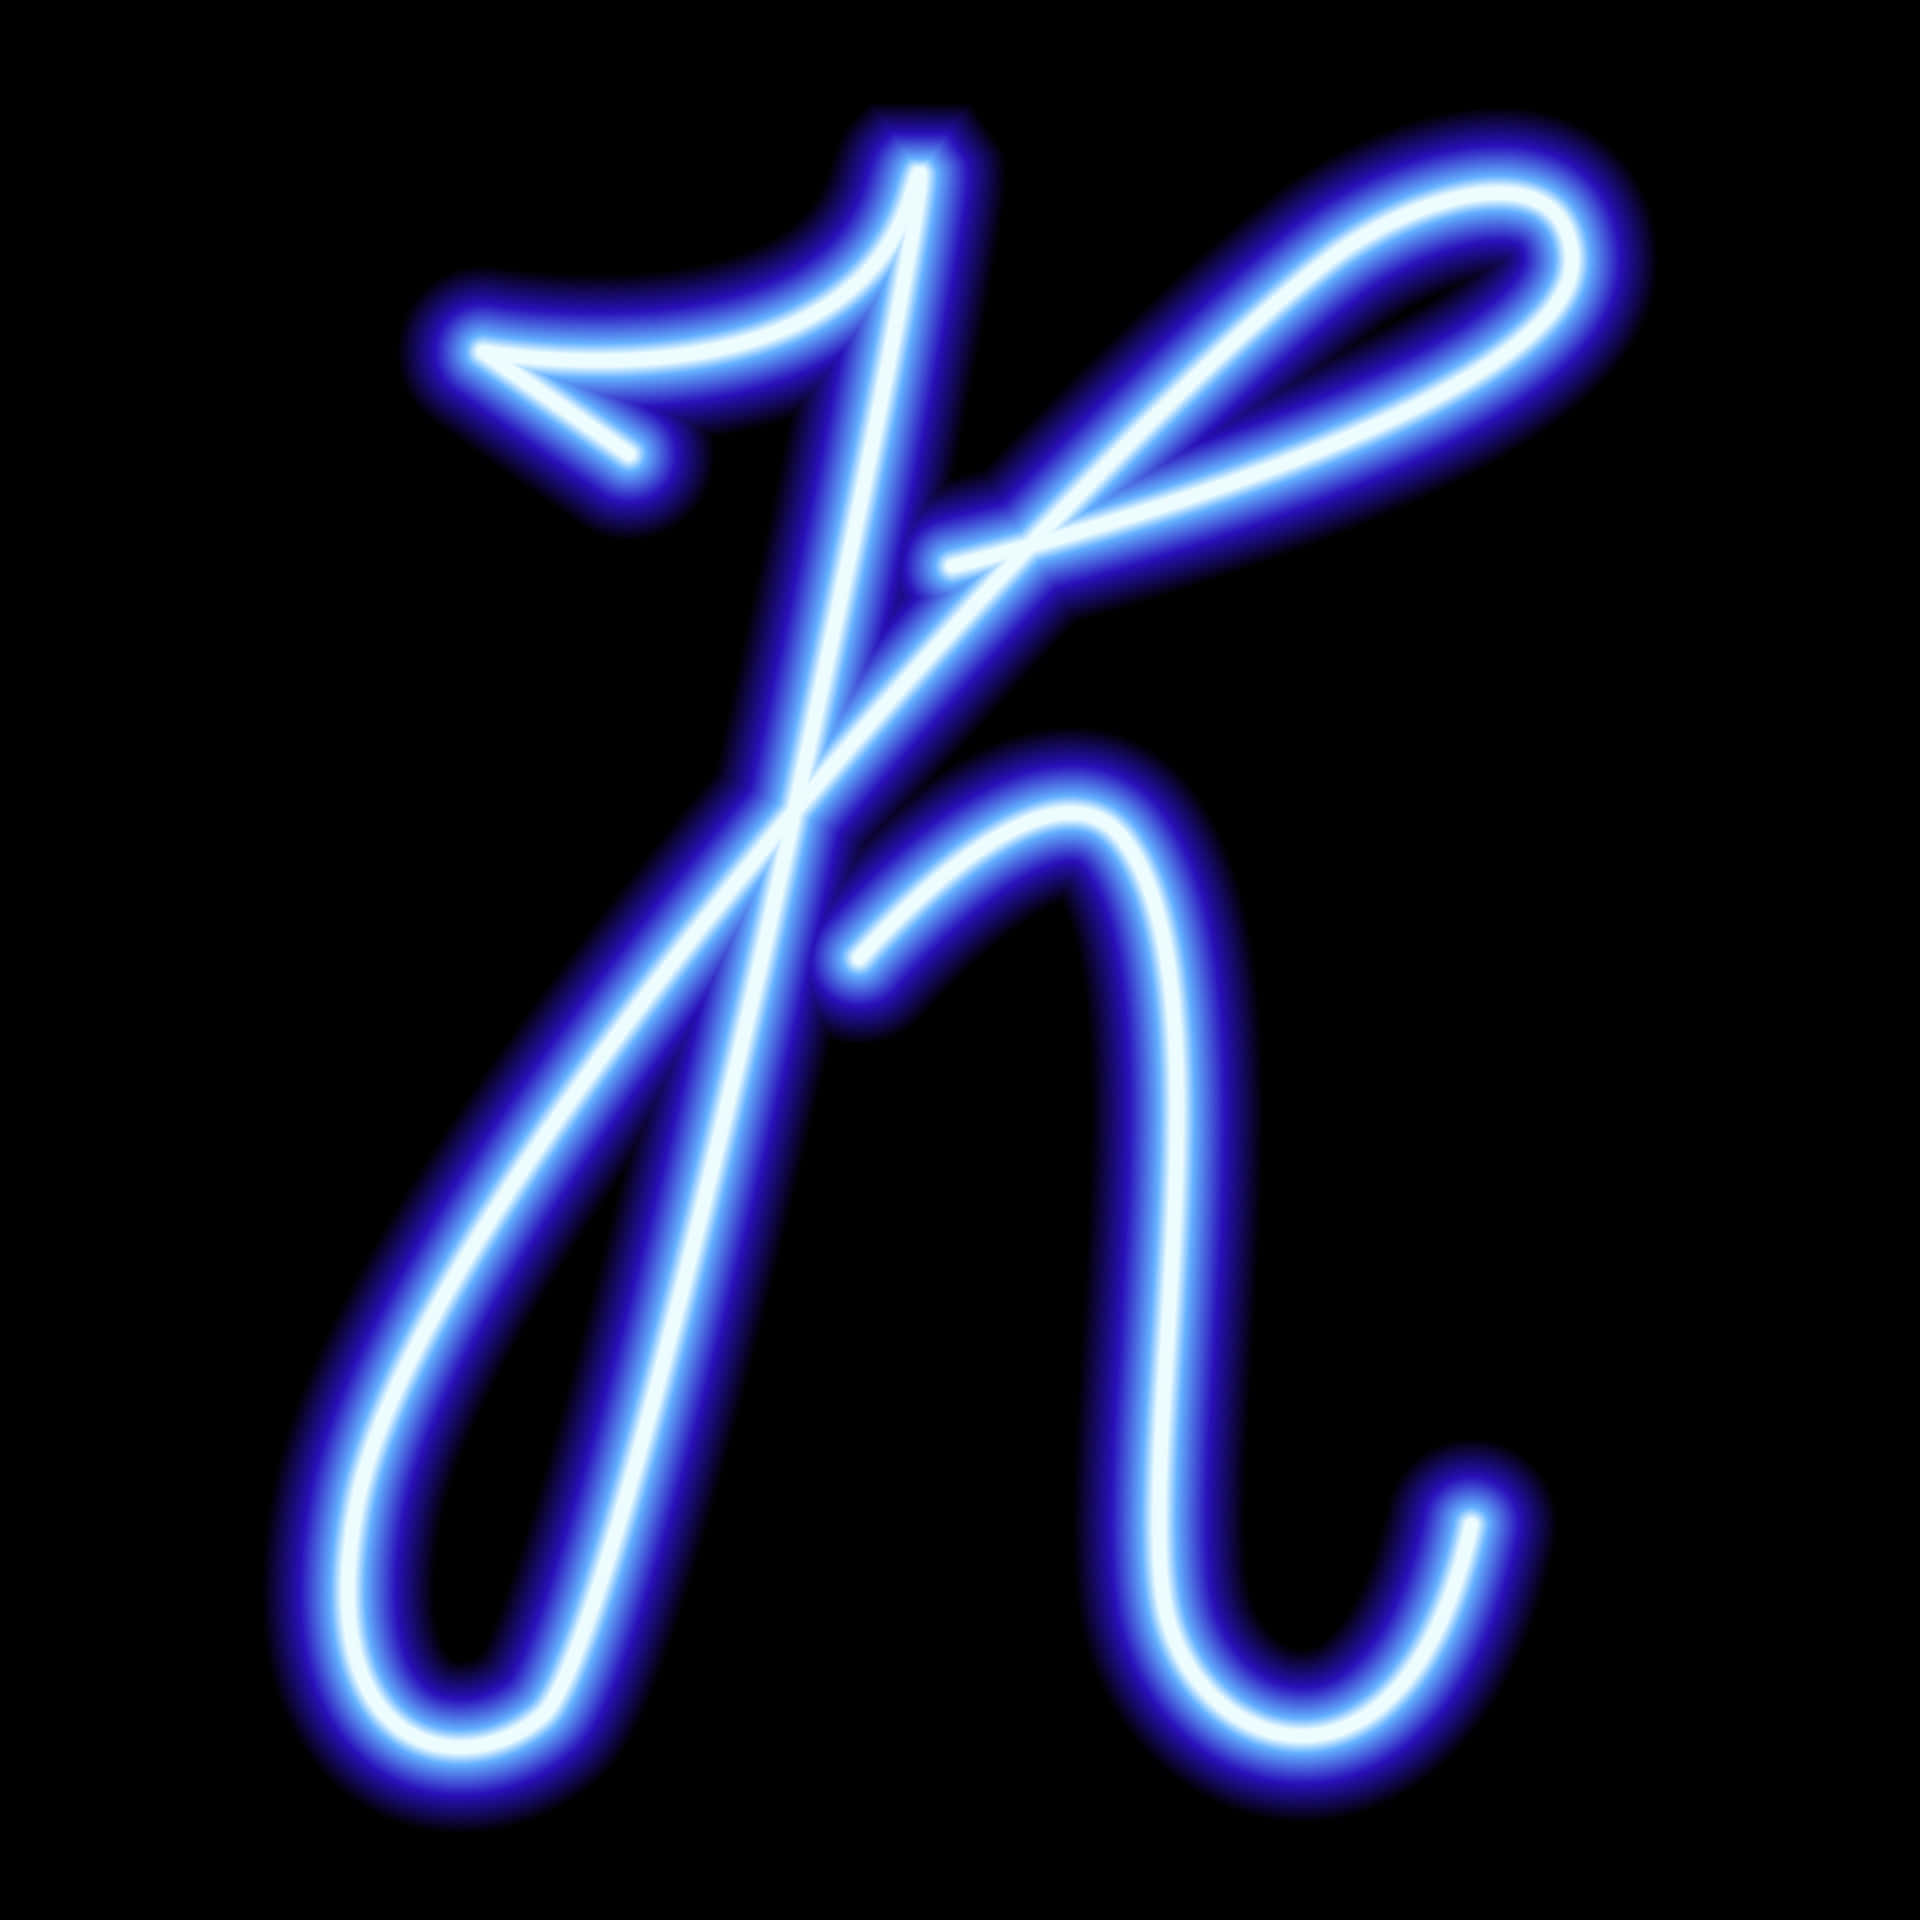 A Blue Neon Letter K On A Black Background